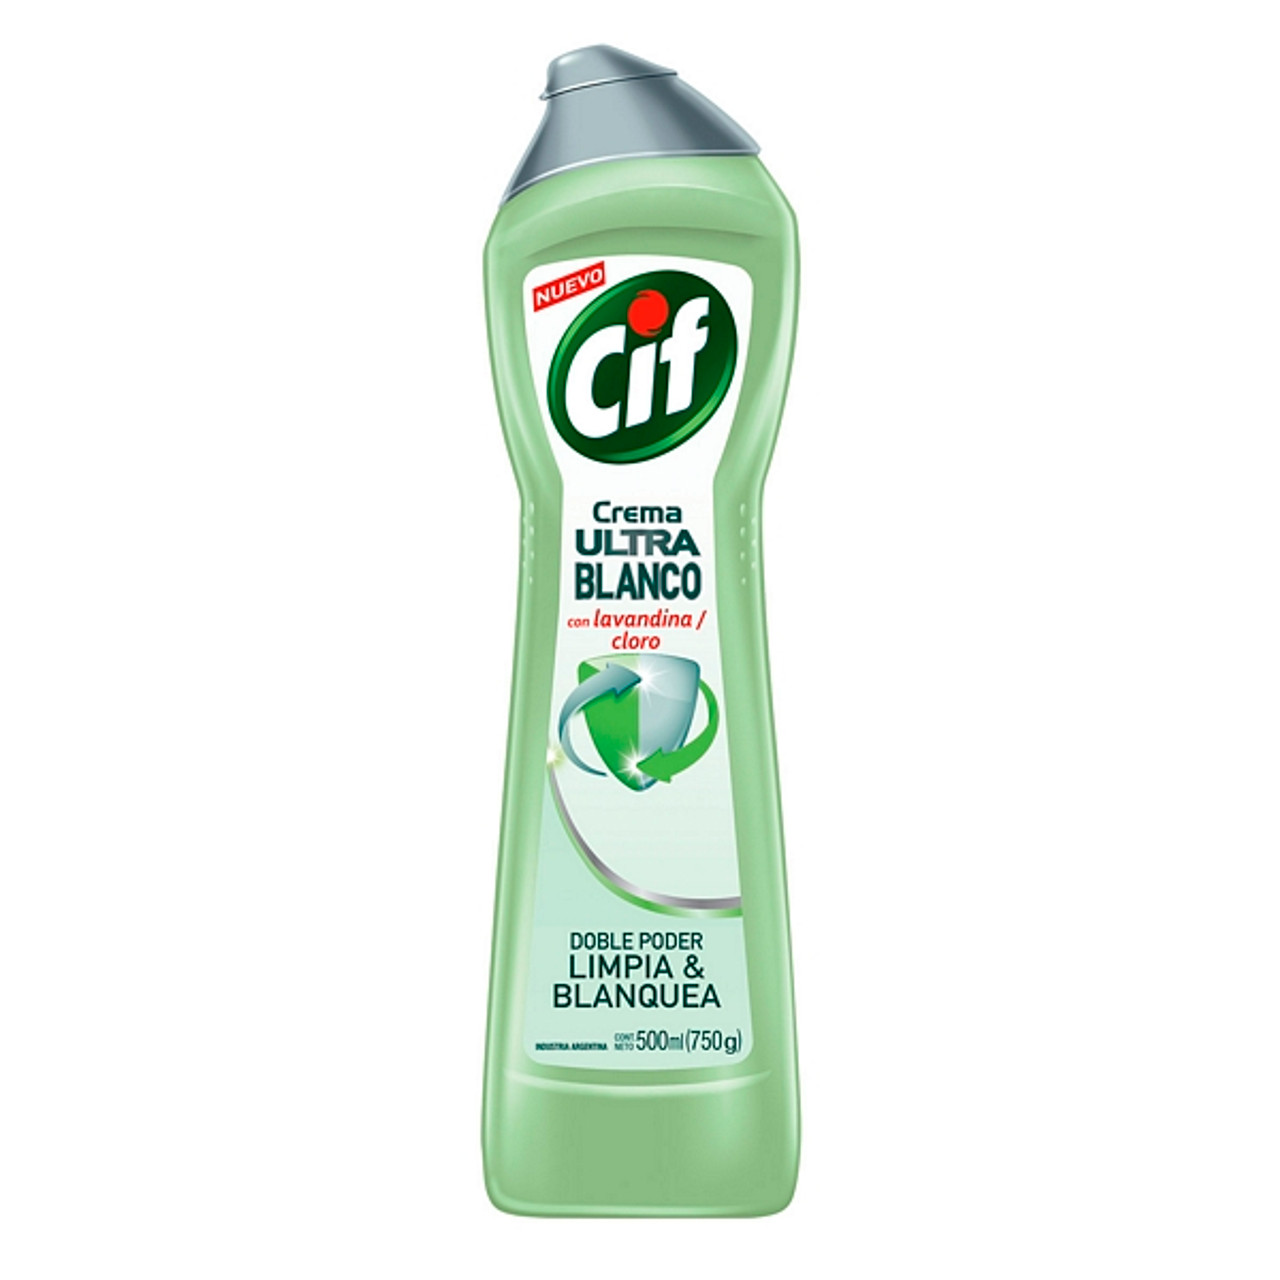 Cif Crema Ultra Blanco Limpiador Cremoso Disinfectant Cream Cleaner with  Bleach, 750 g / 1.6 lb